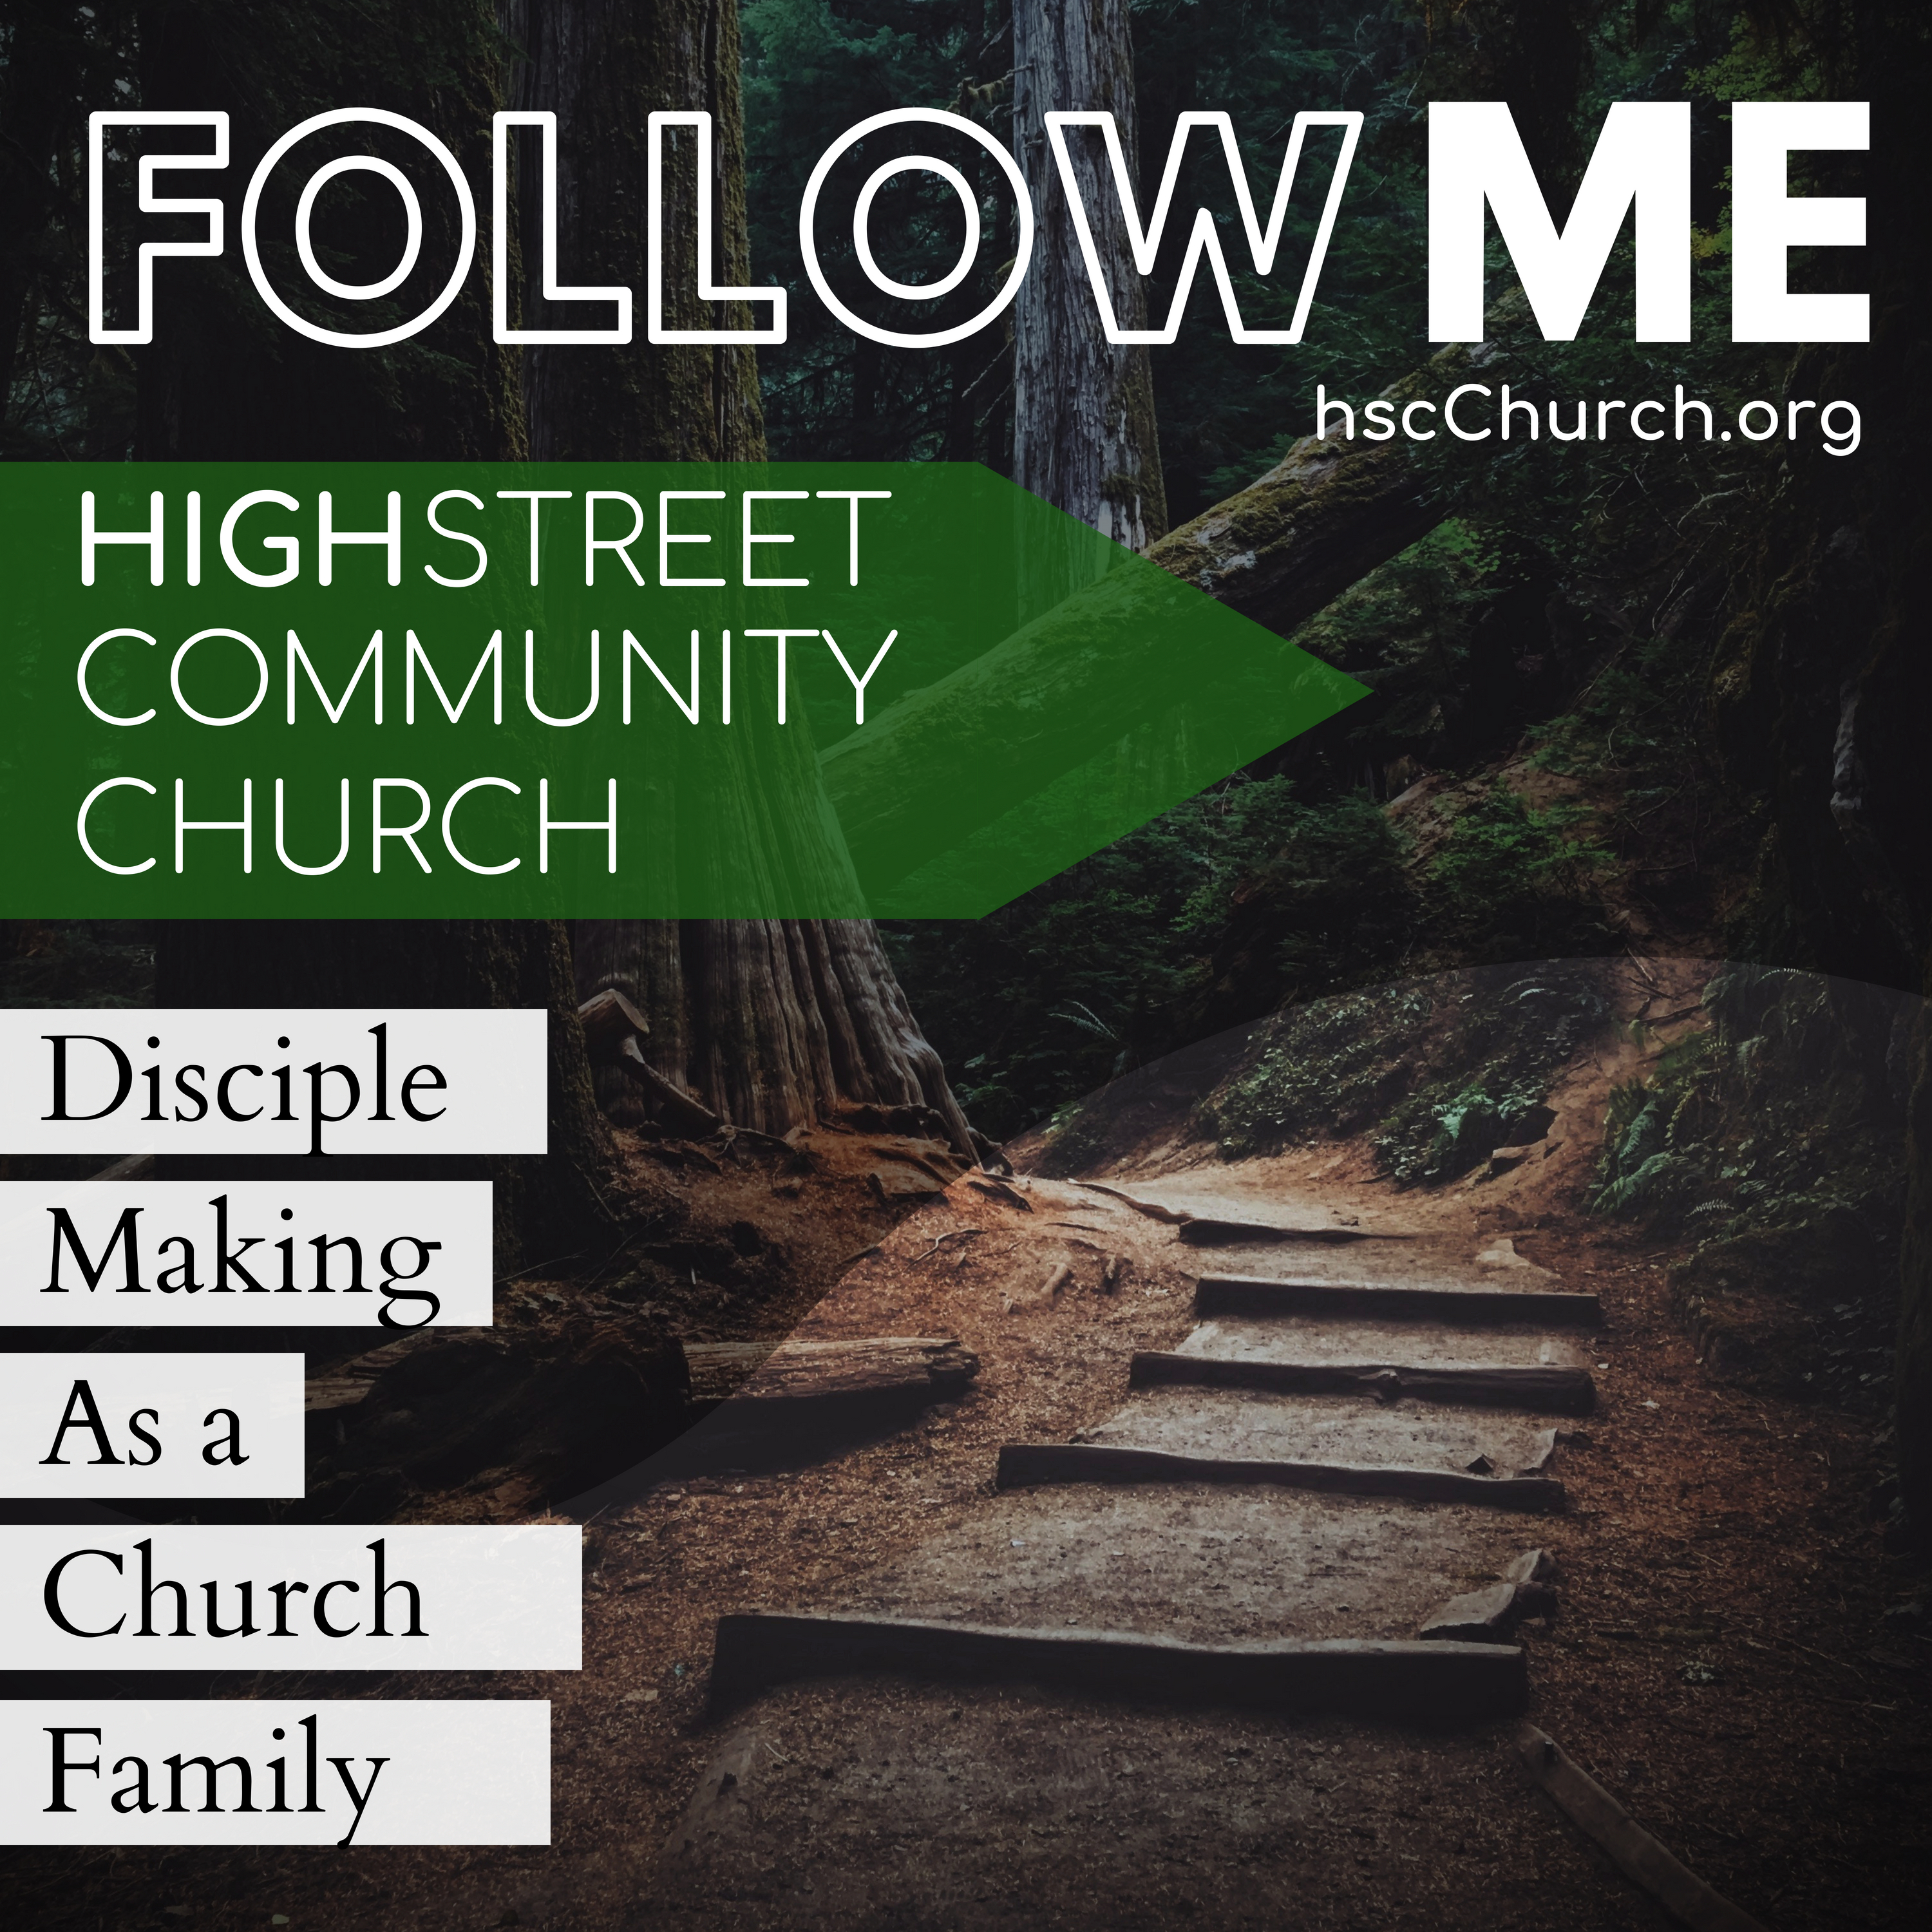 High Street Community Church